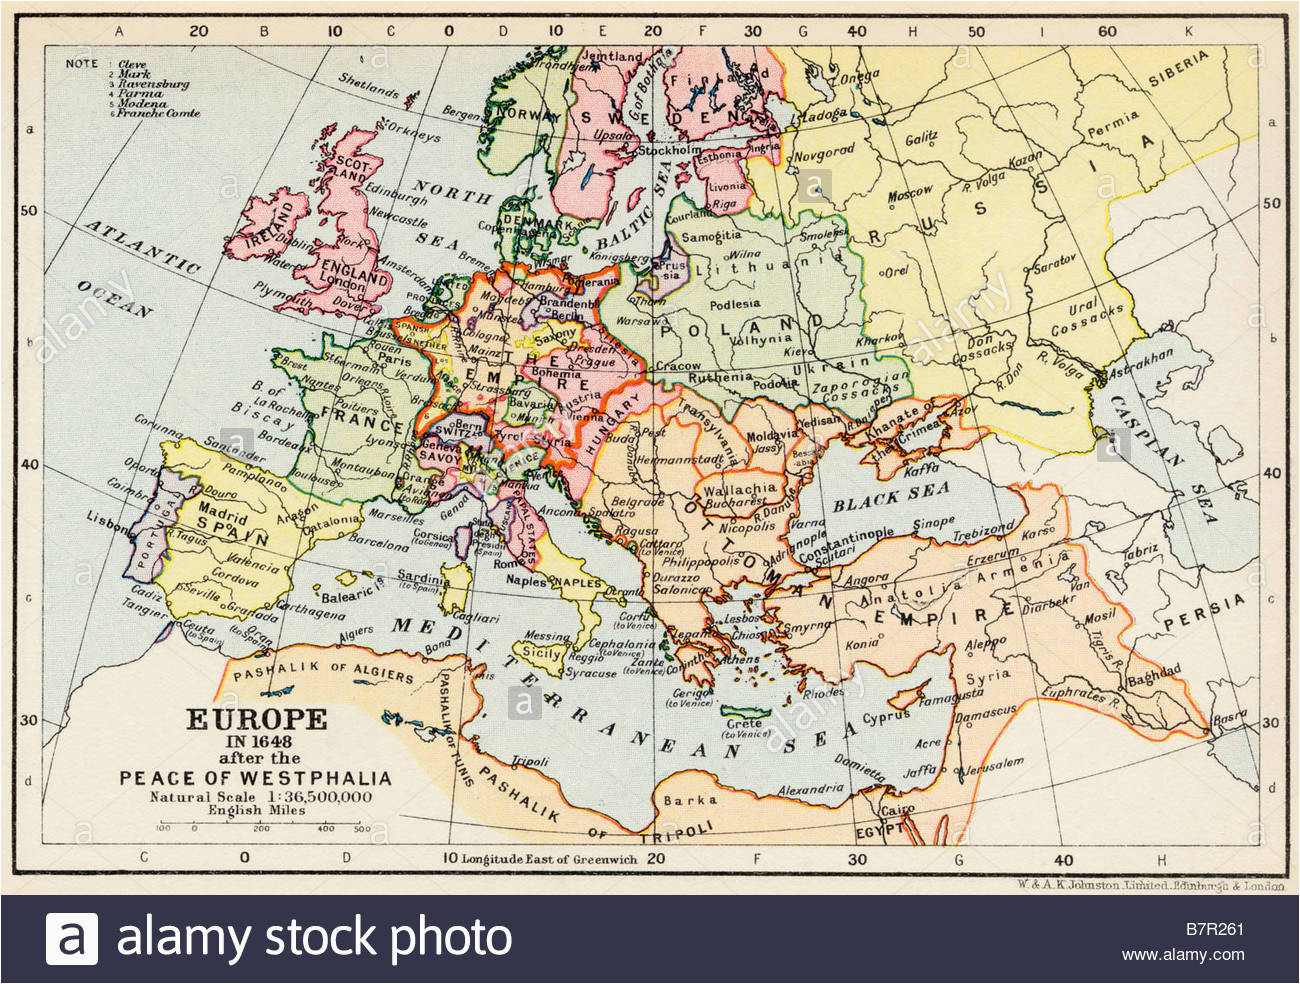 historical europe maps stock photos historical europe maps